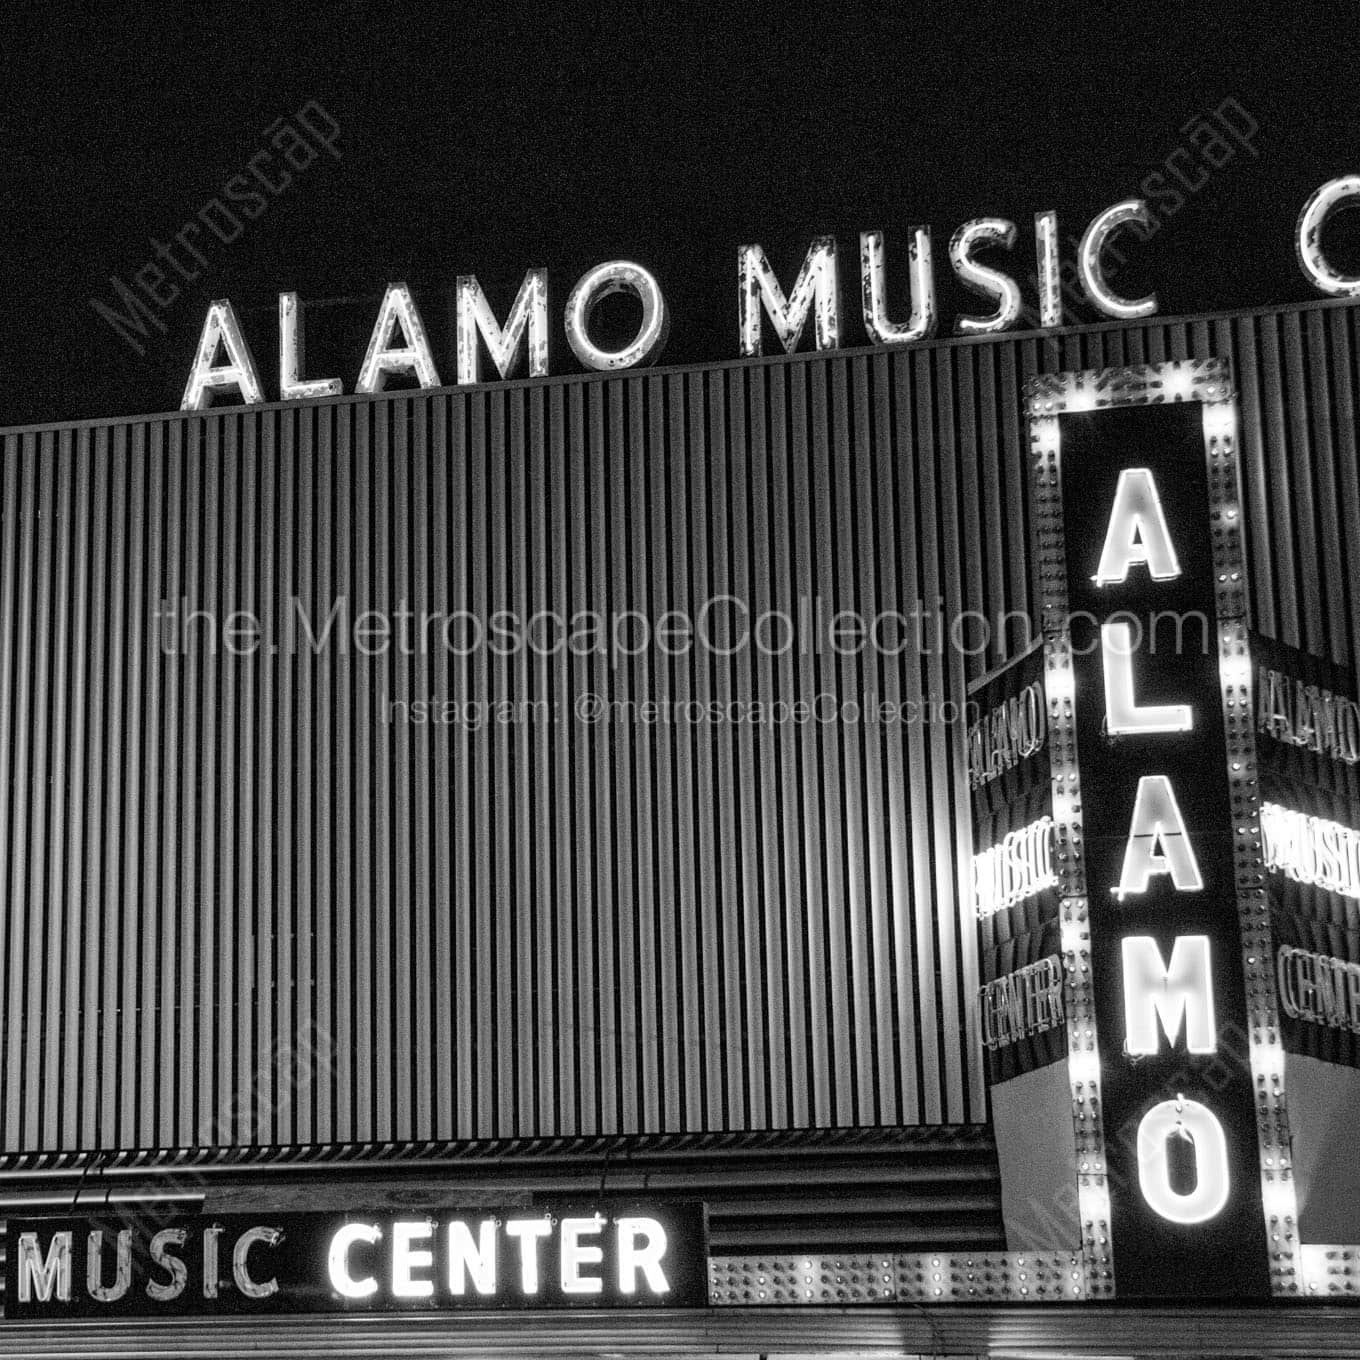 alamo music center at night Black & White Office Art